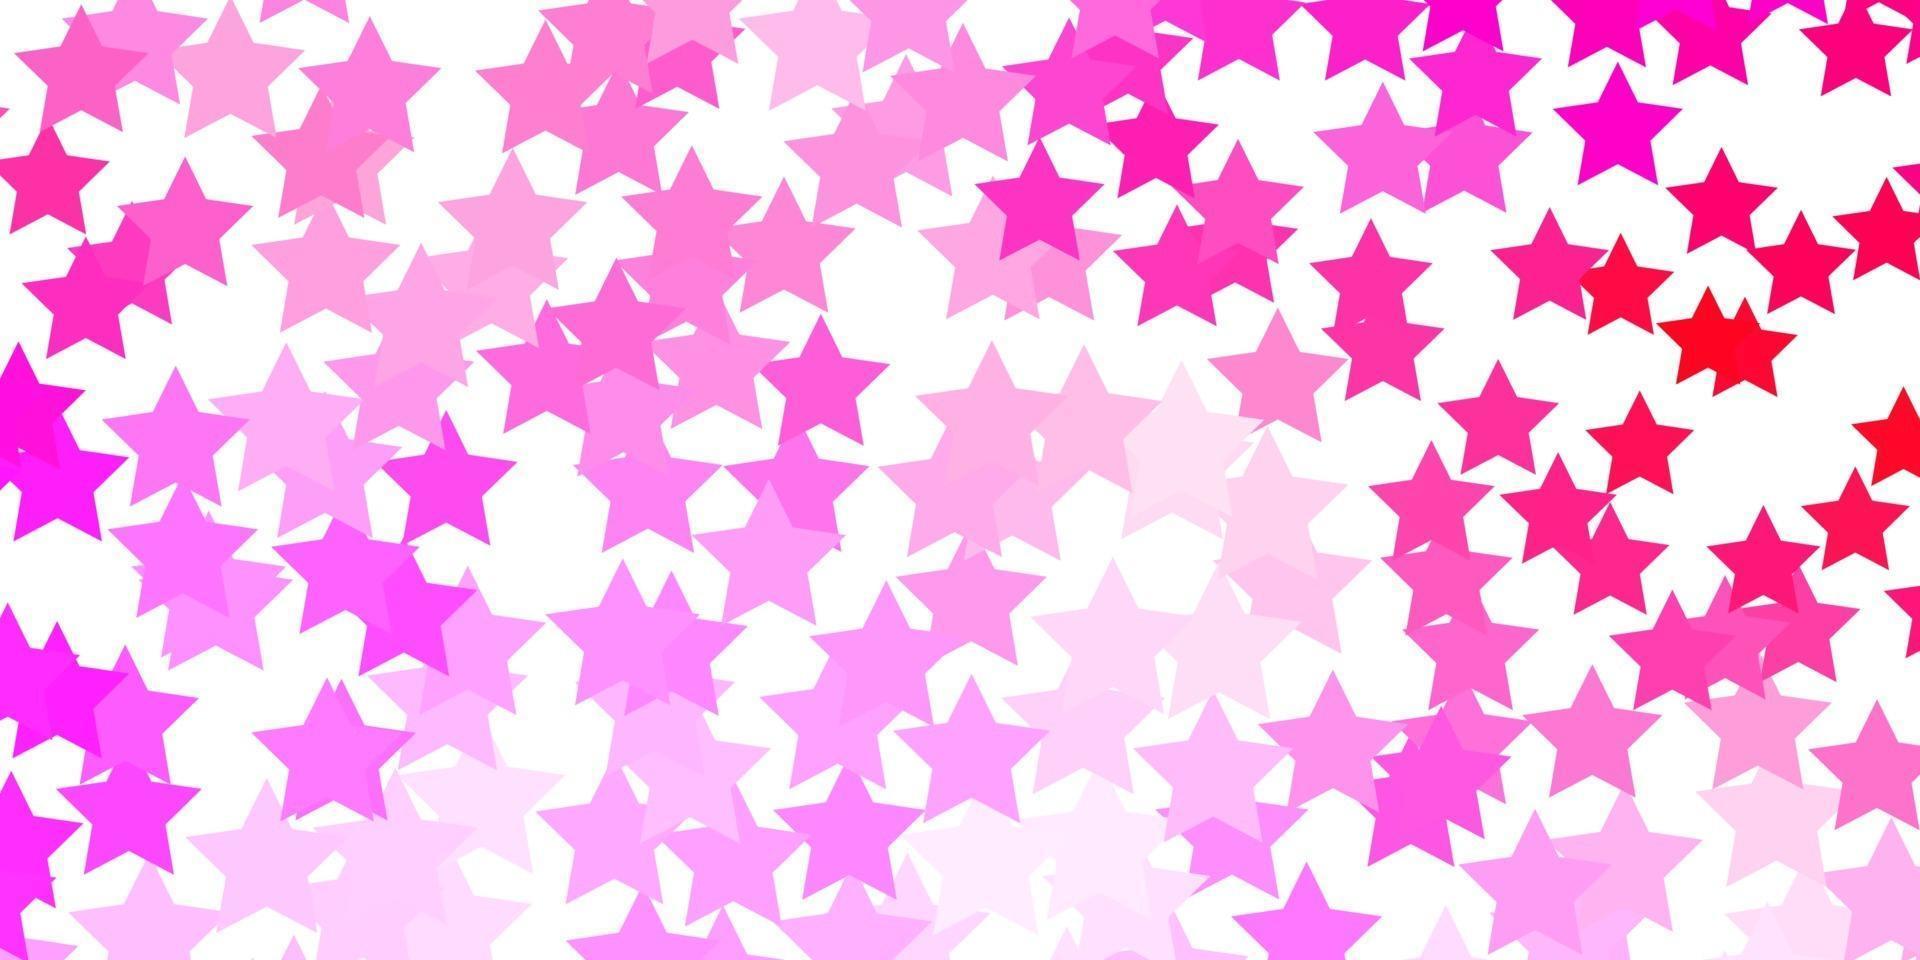 fundo vector rosa claro com estrelas coloridas.